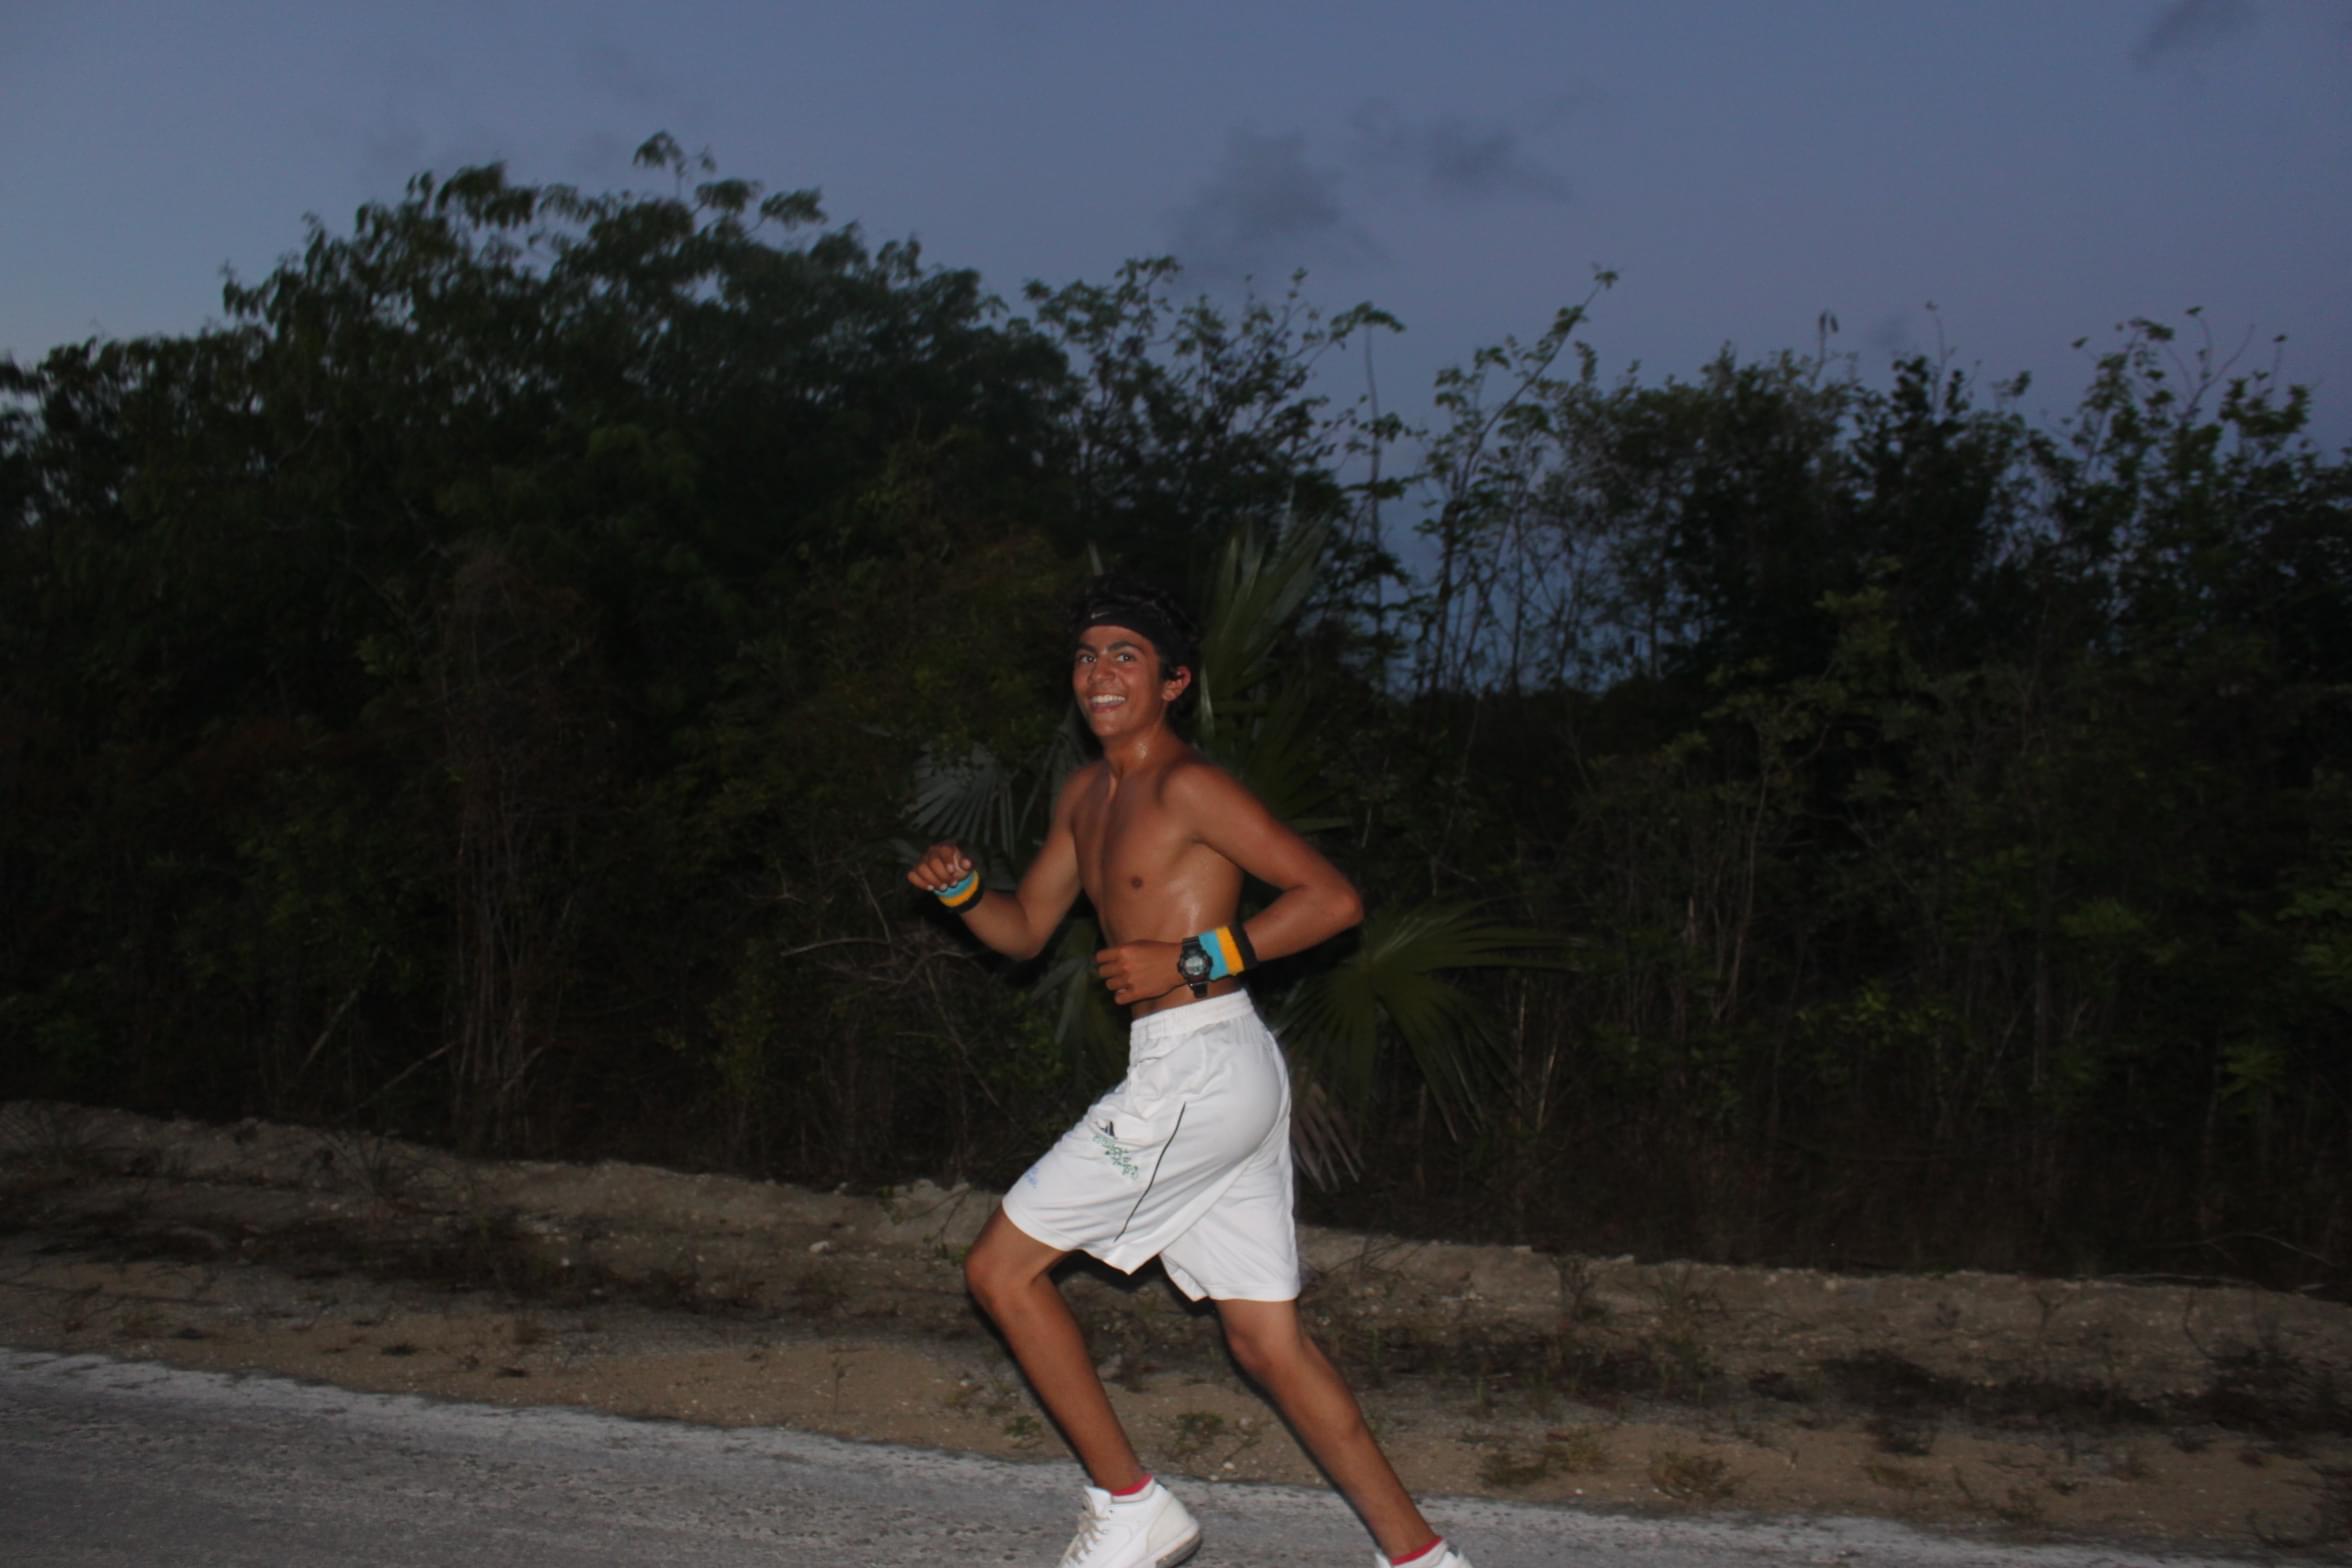 Evan running during run track at The Island School, Spring 2011